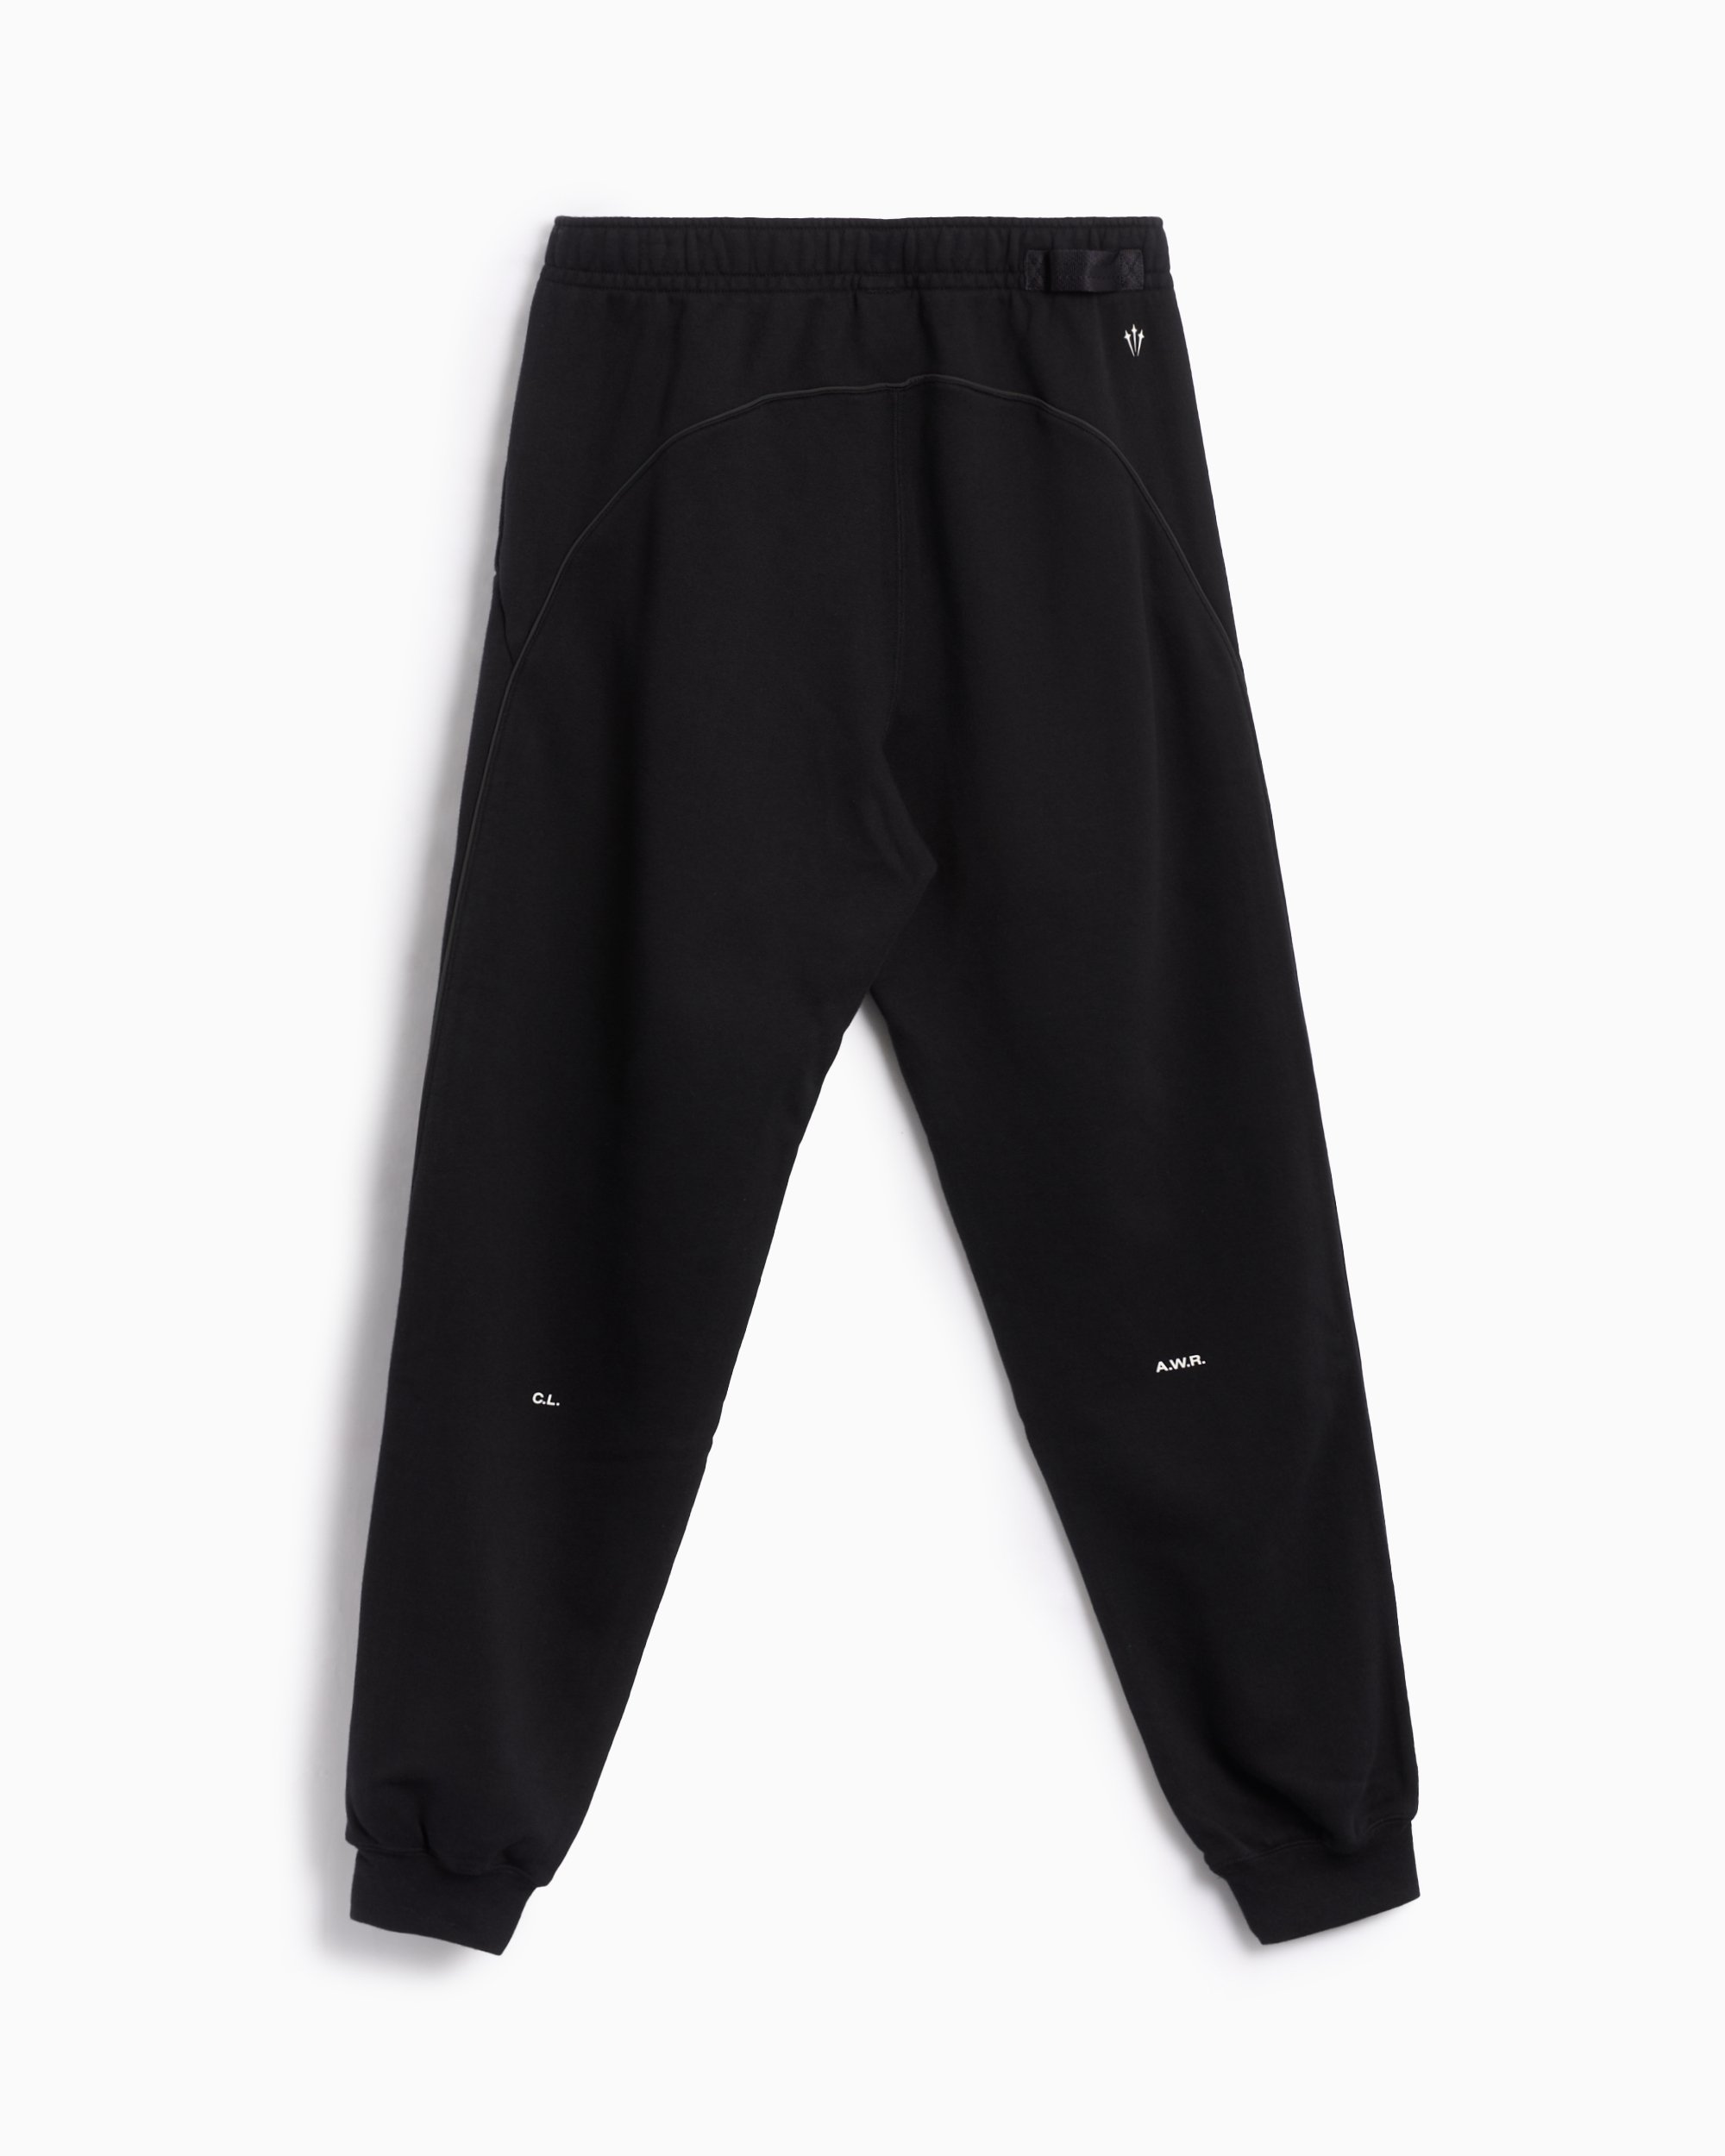 Y2K Black Nike Sweatpants, Waist 30”, Length